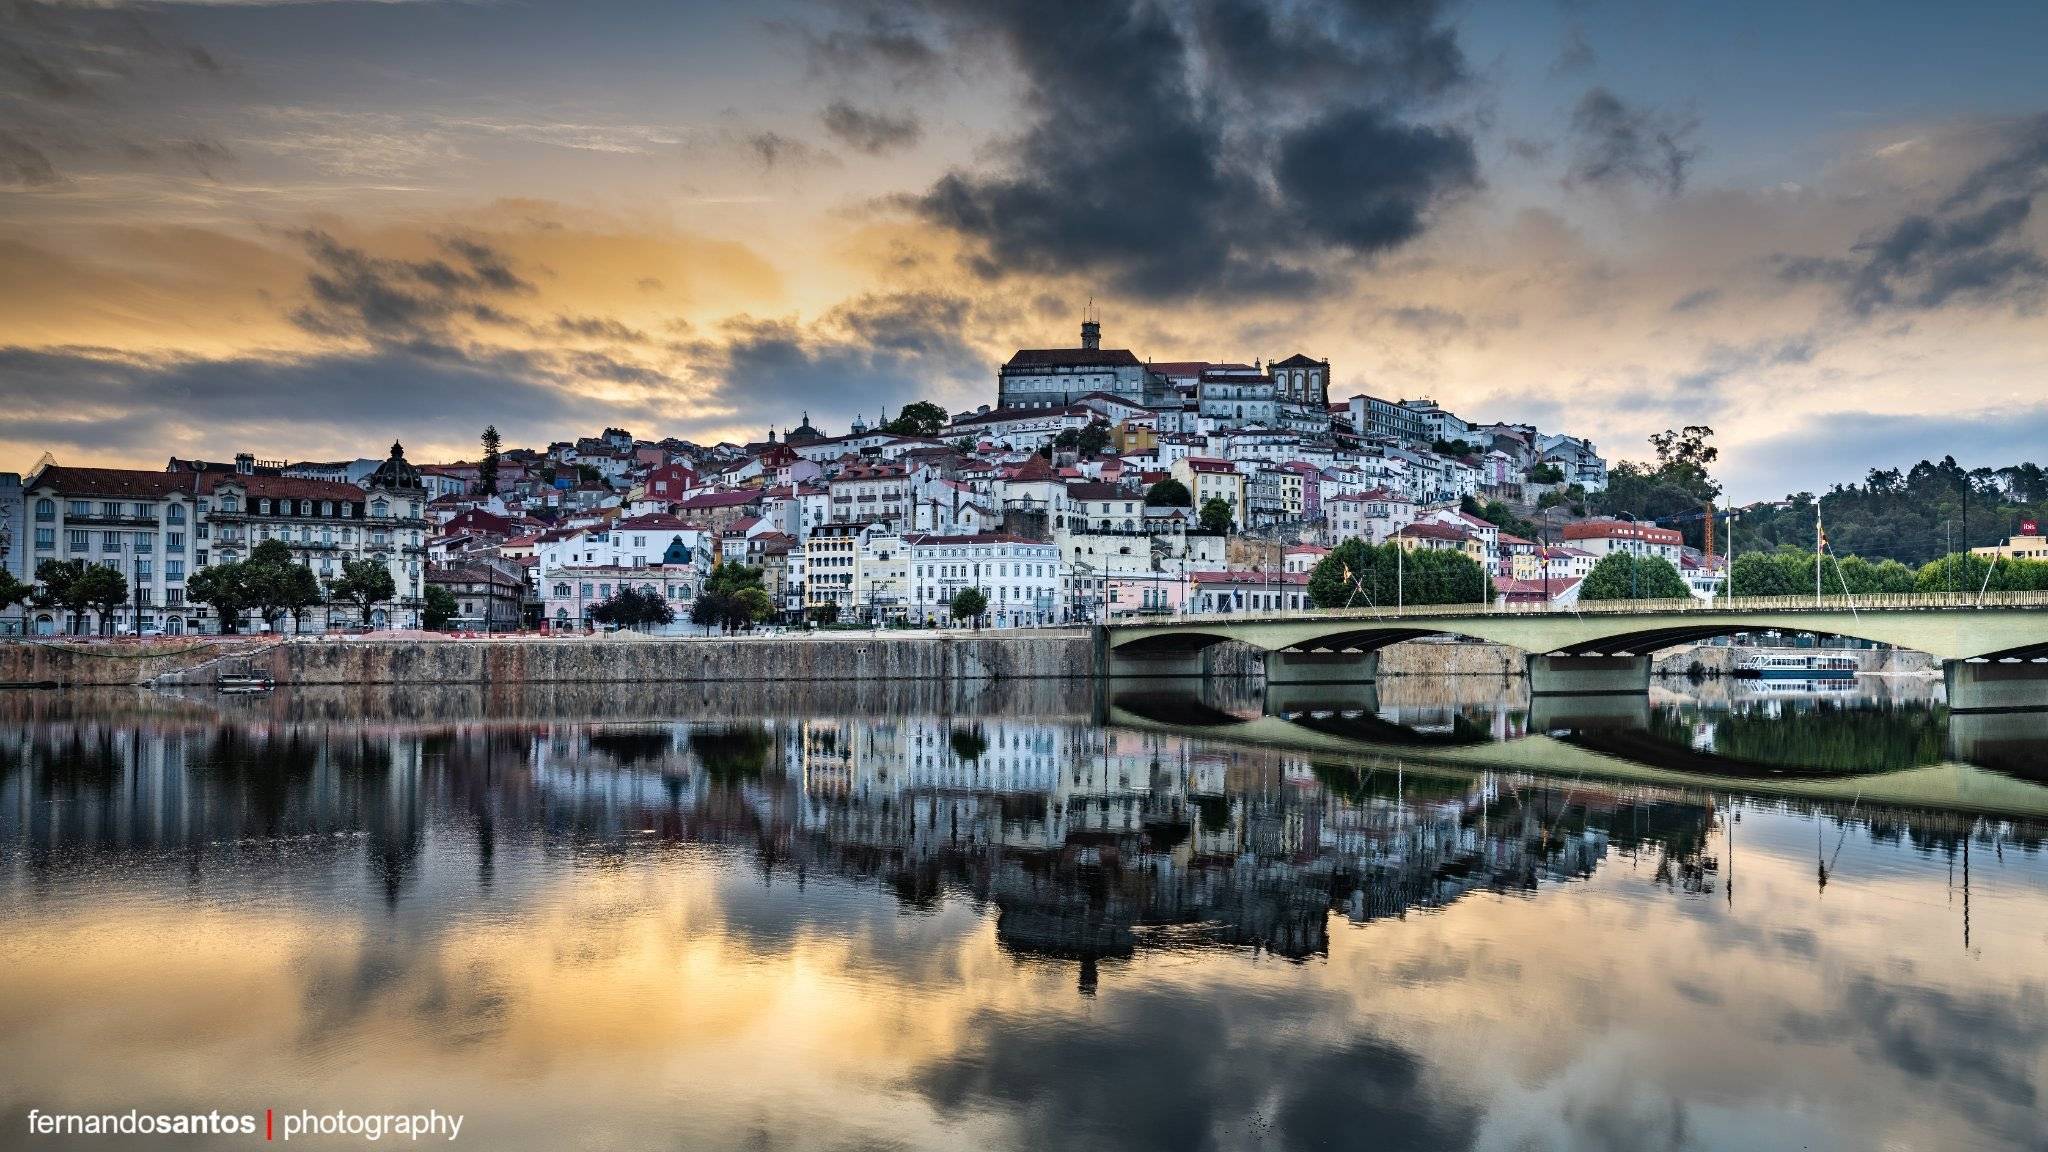 Coimbra, eine der ältesten Universitätsstädte Europas